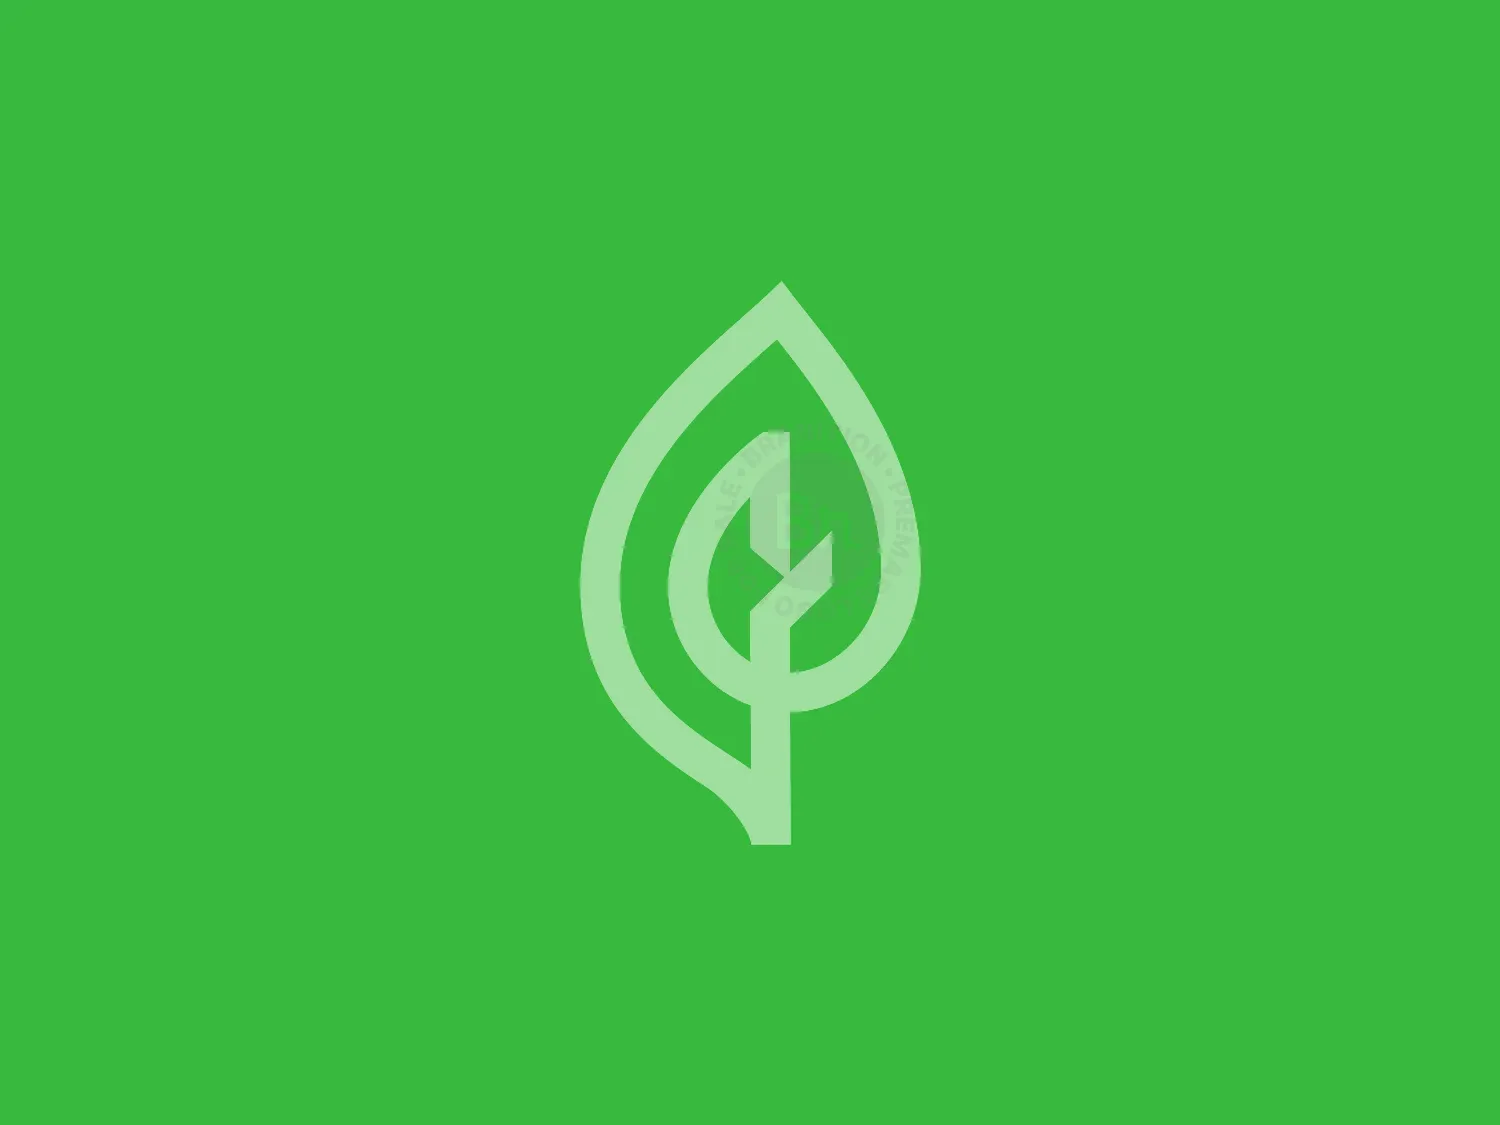 Minimalist_leaf Logo Design